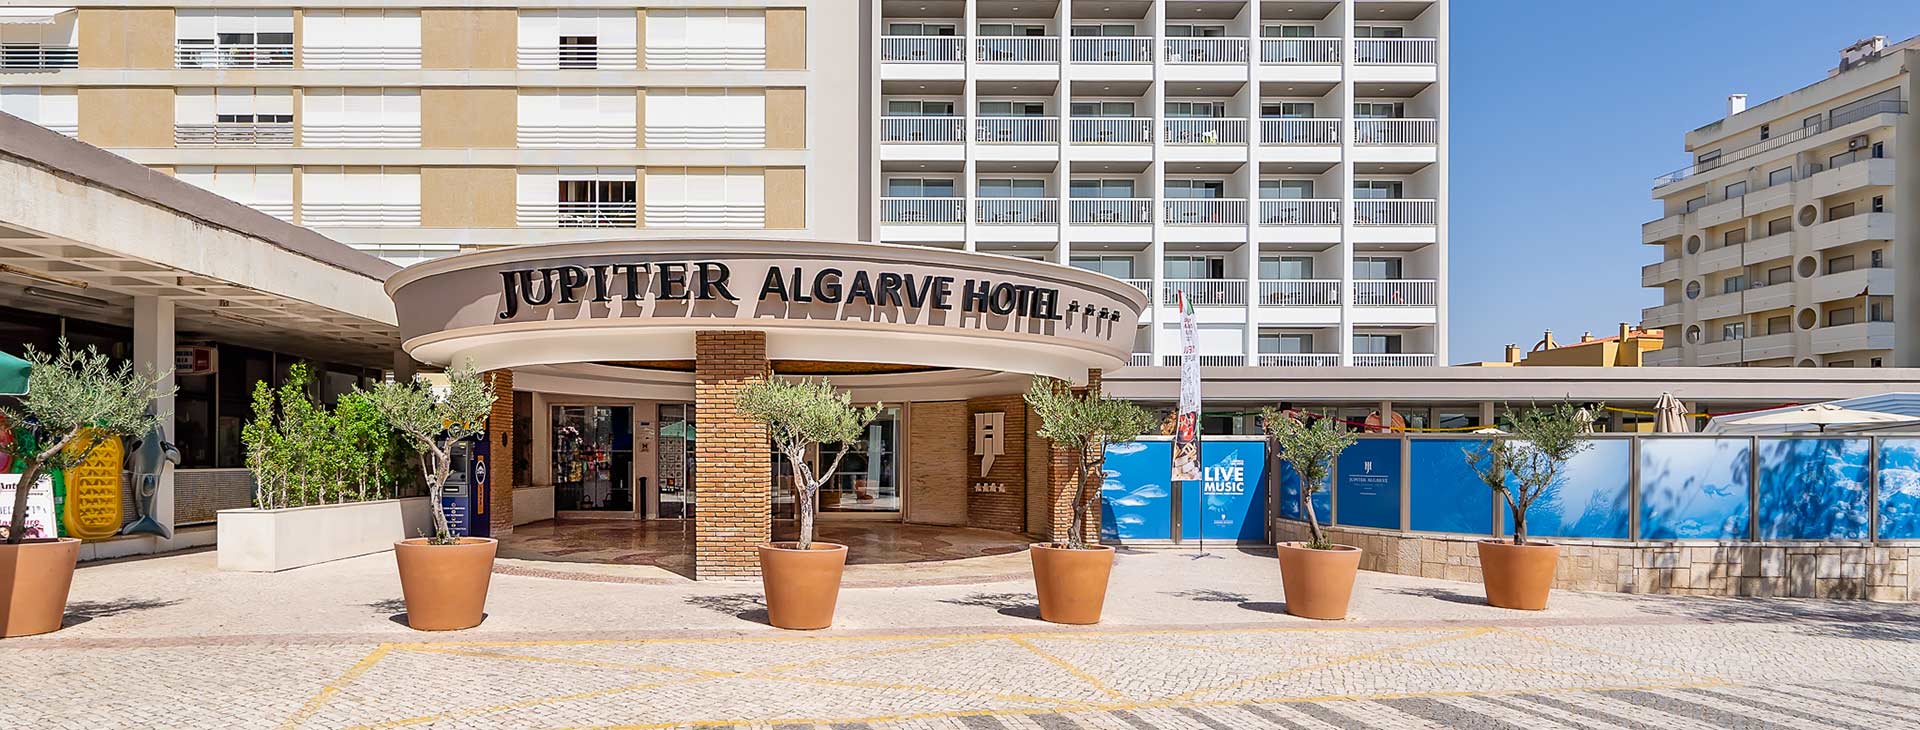 Jupiter Algarve Hotel Obrázek13